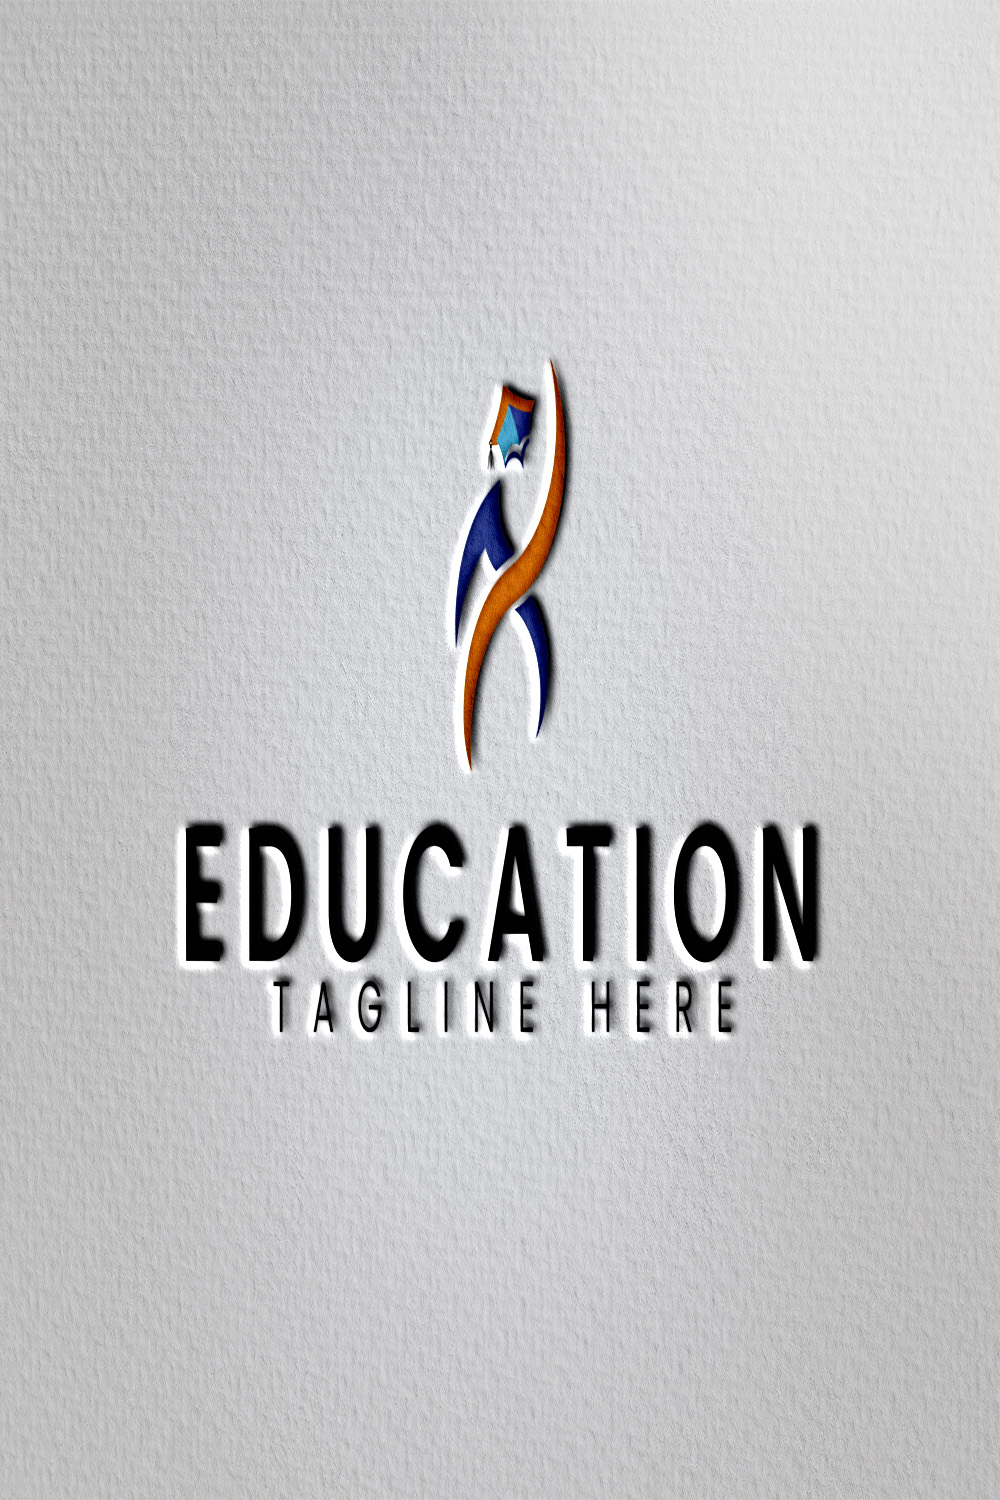 Educational logo pinterest preview image.